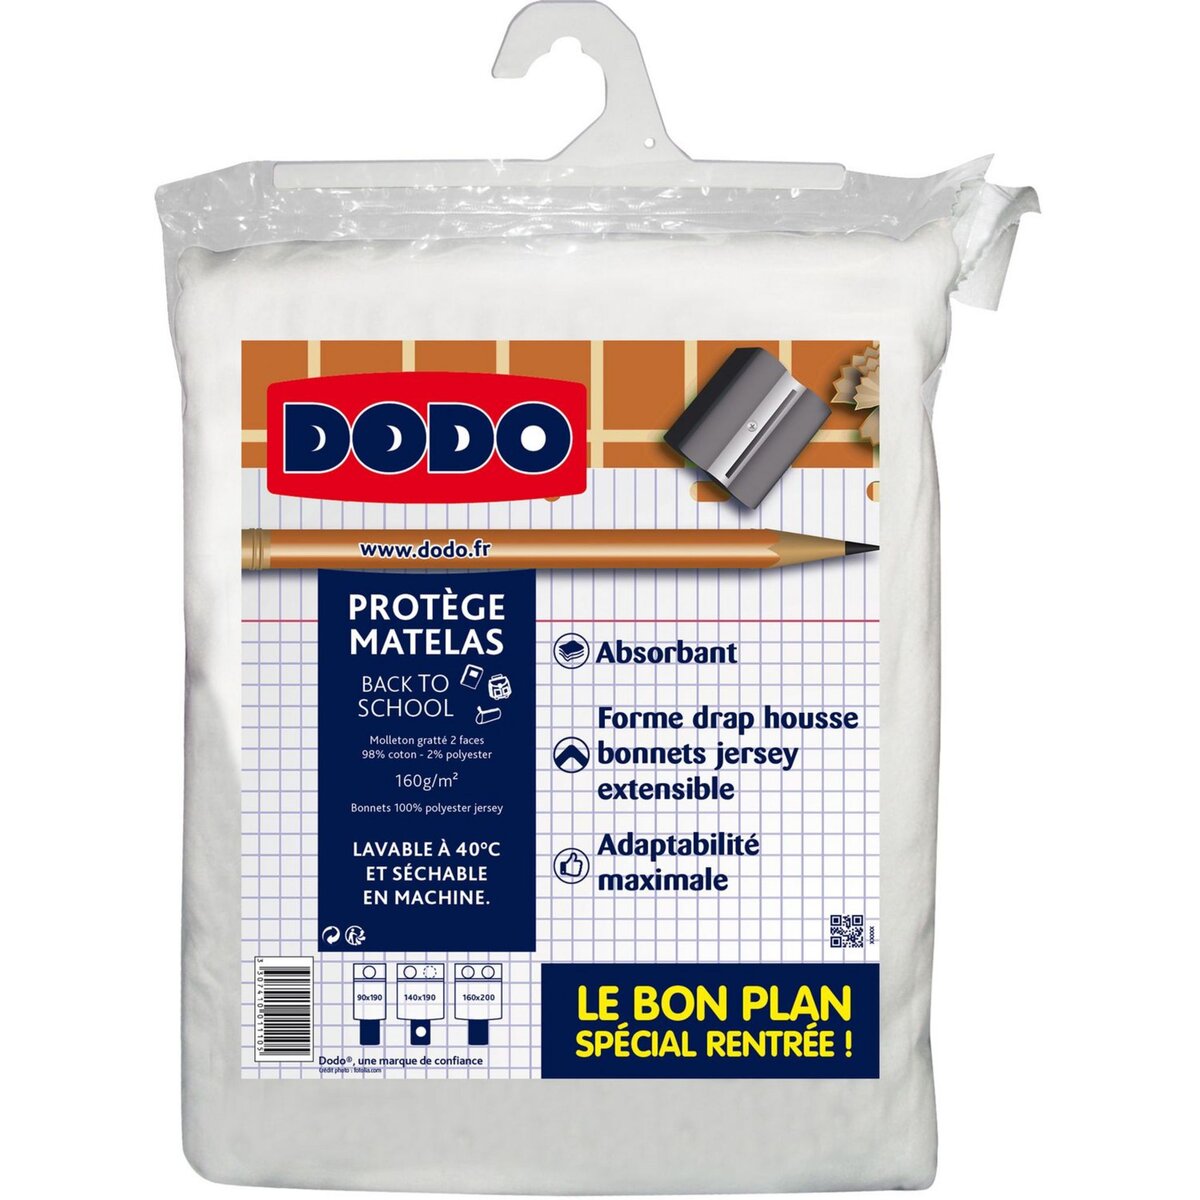 DODO Protège matelas absorbant en polycoton BACK TO SCHOOL 